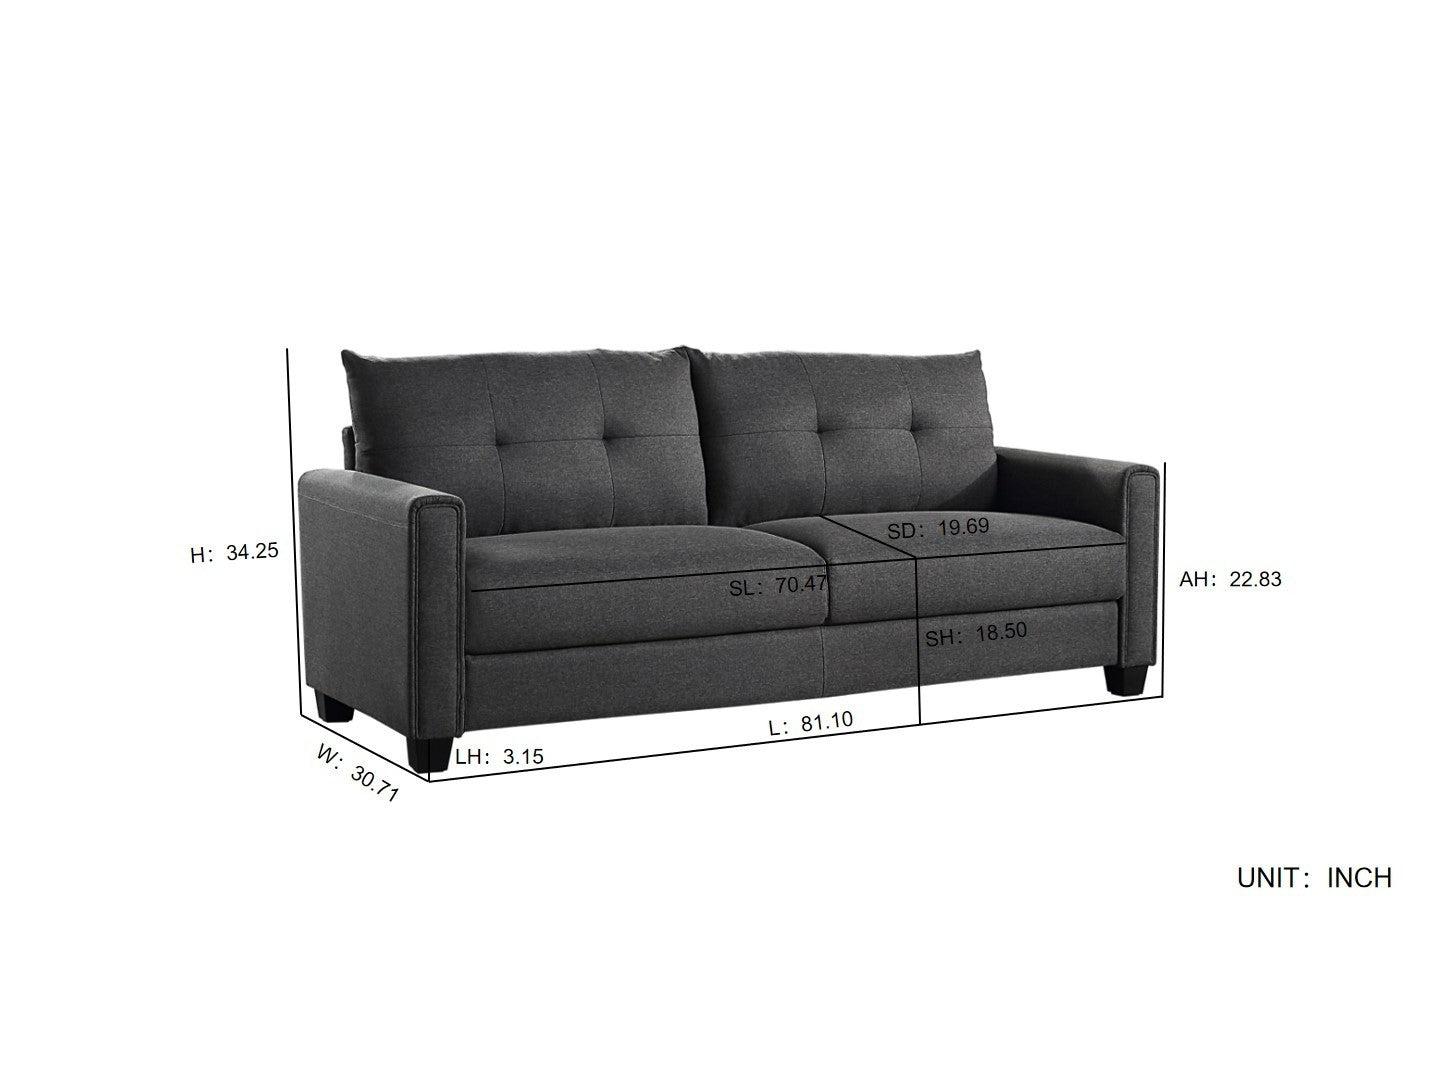 Linen Fabric Upholstery sofa/Tufted Cushions/ Easy, Assembly,Dark Grey